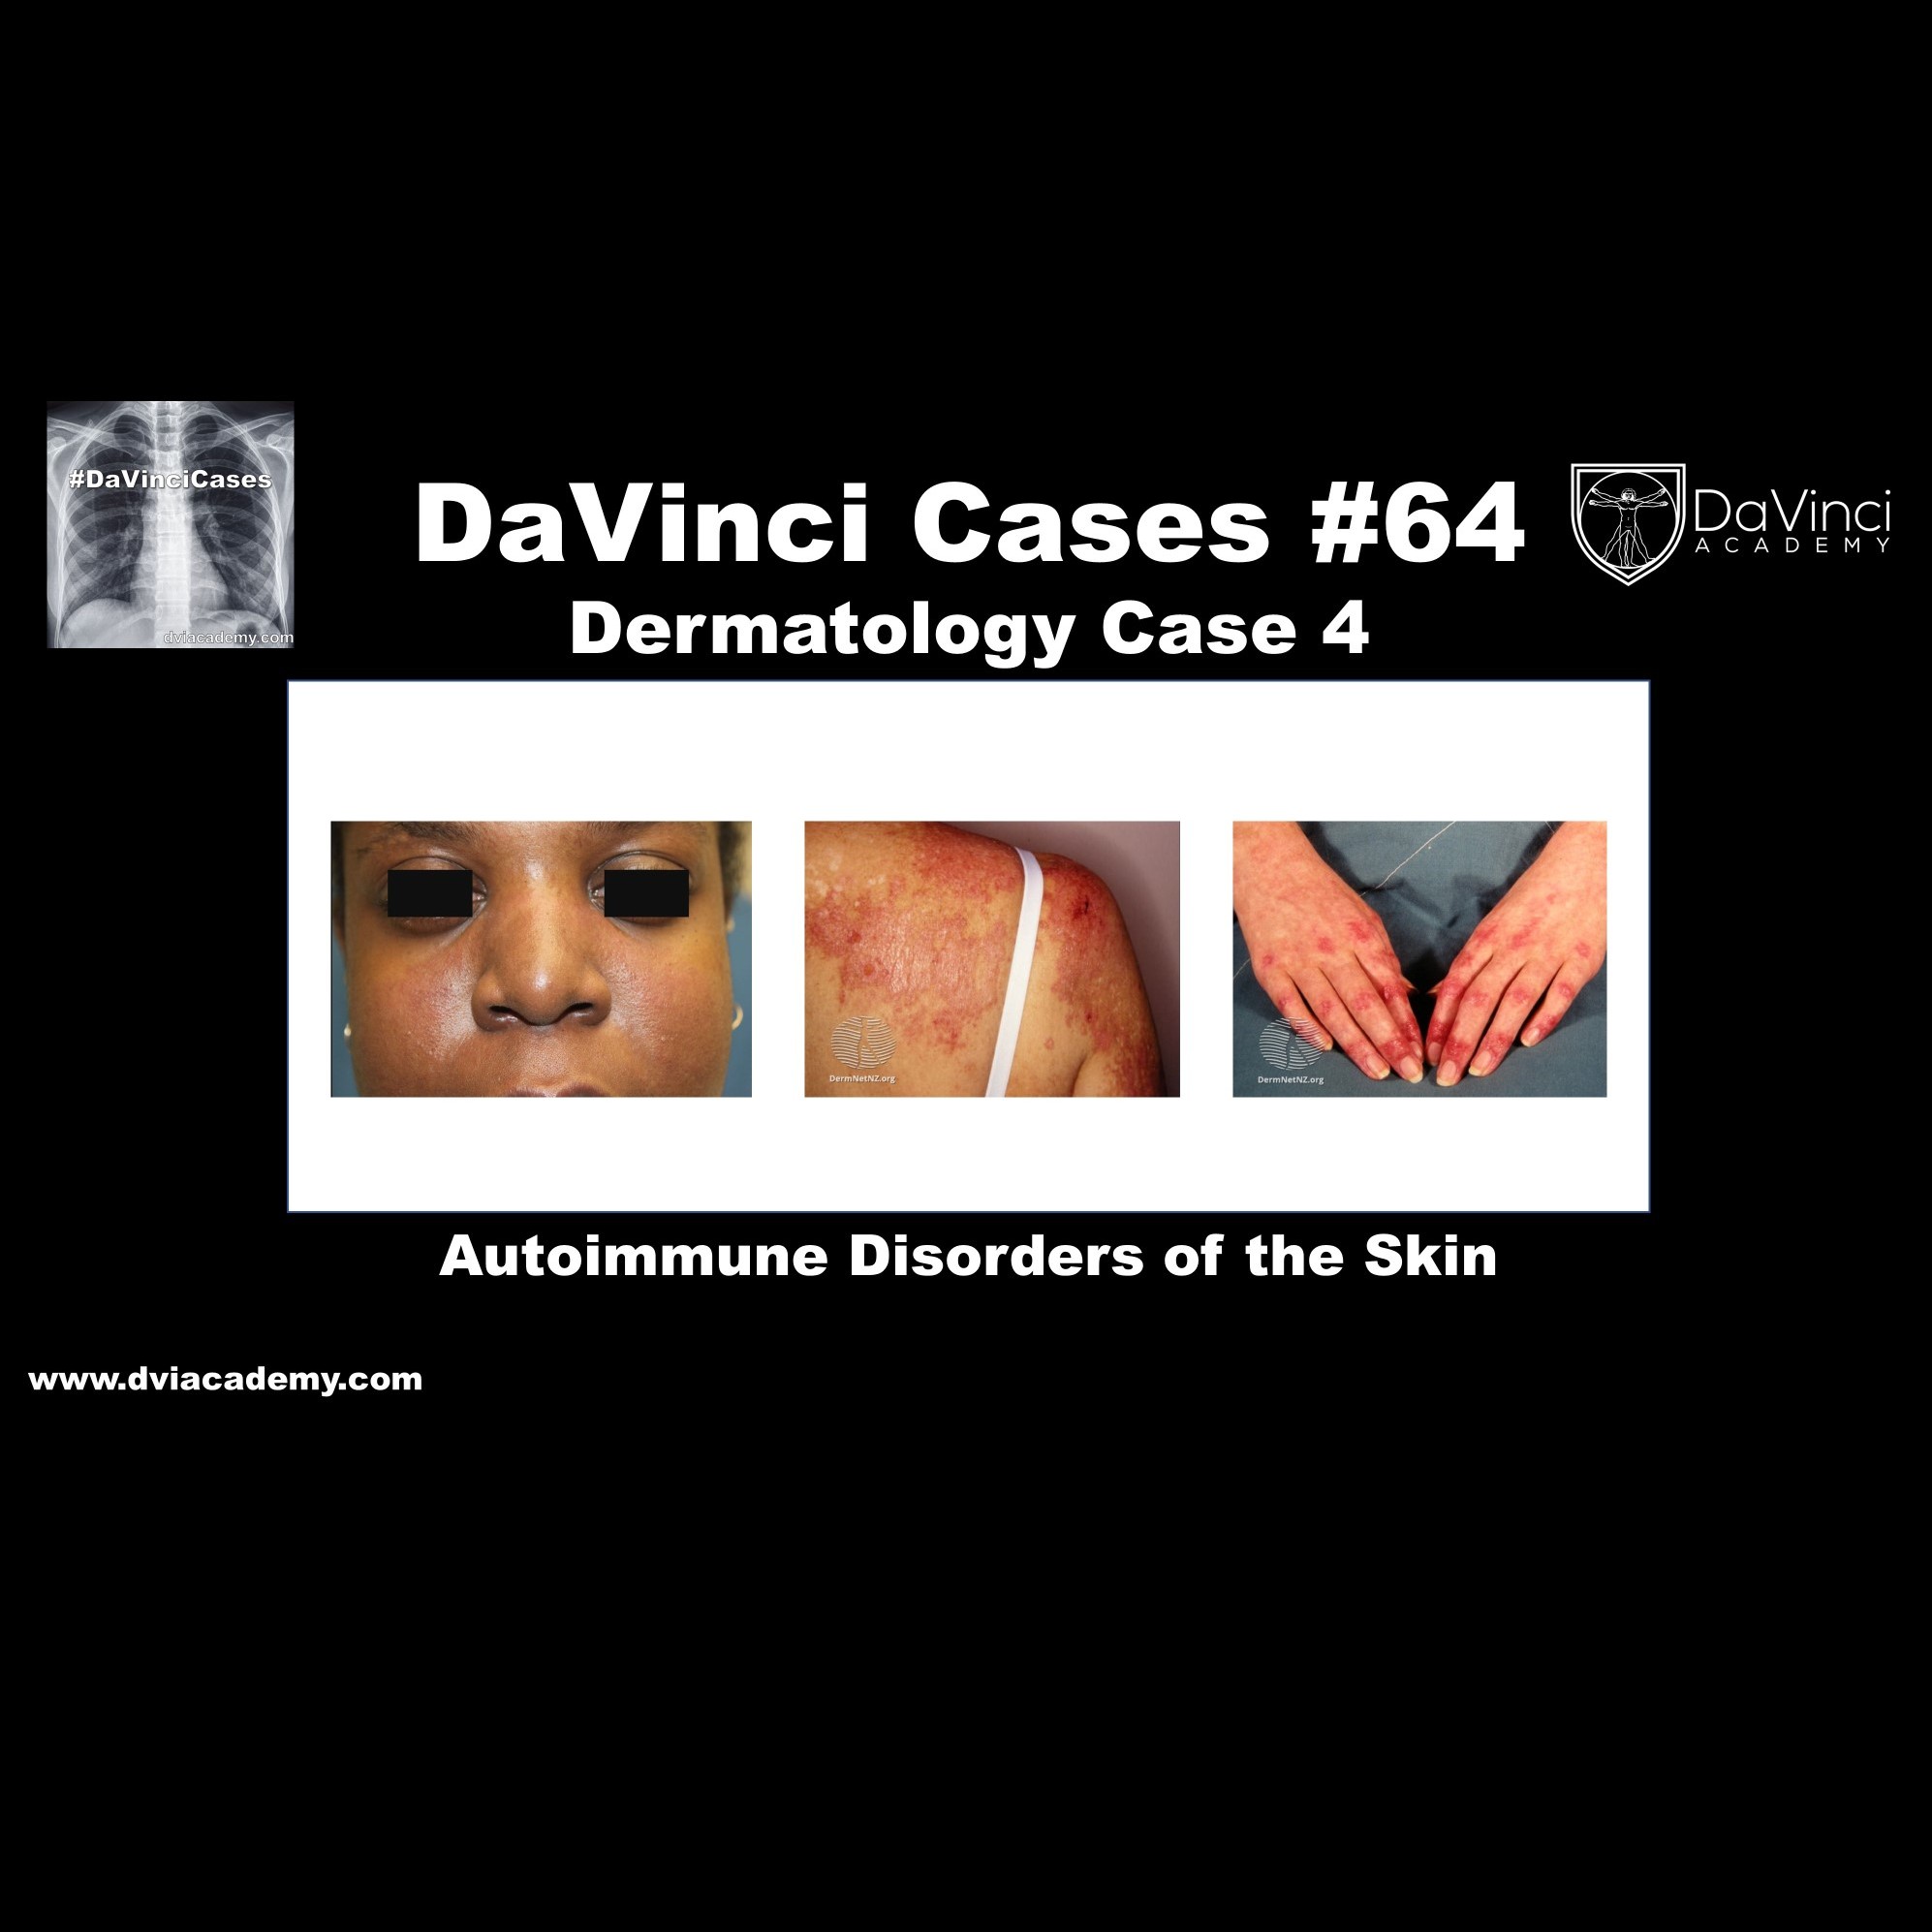 Autoimmune Disorders of the Skin [#DaVinciCases Dermatology Case 4]